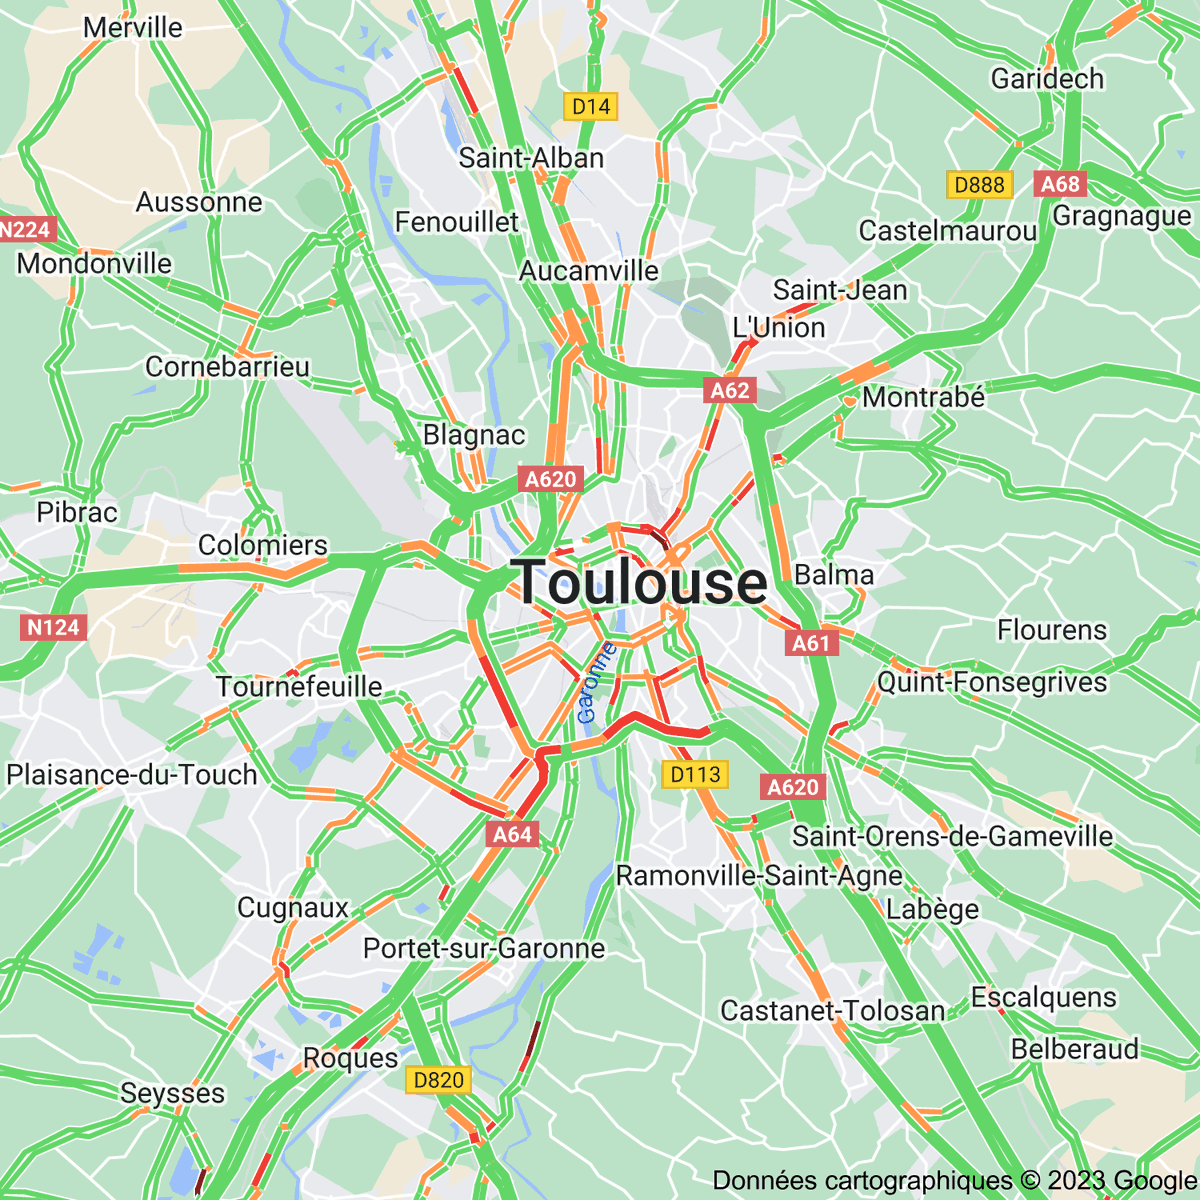 [FLASH 19:10] Trafic à Toulouse toulousetrafic.com #Toulouse #ToulousePeriph #InfoTrafic